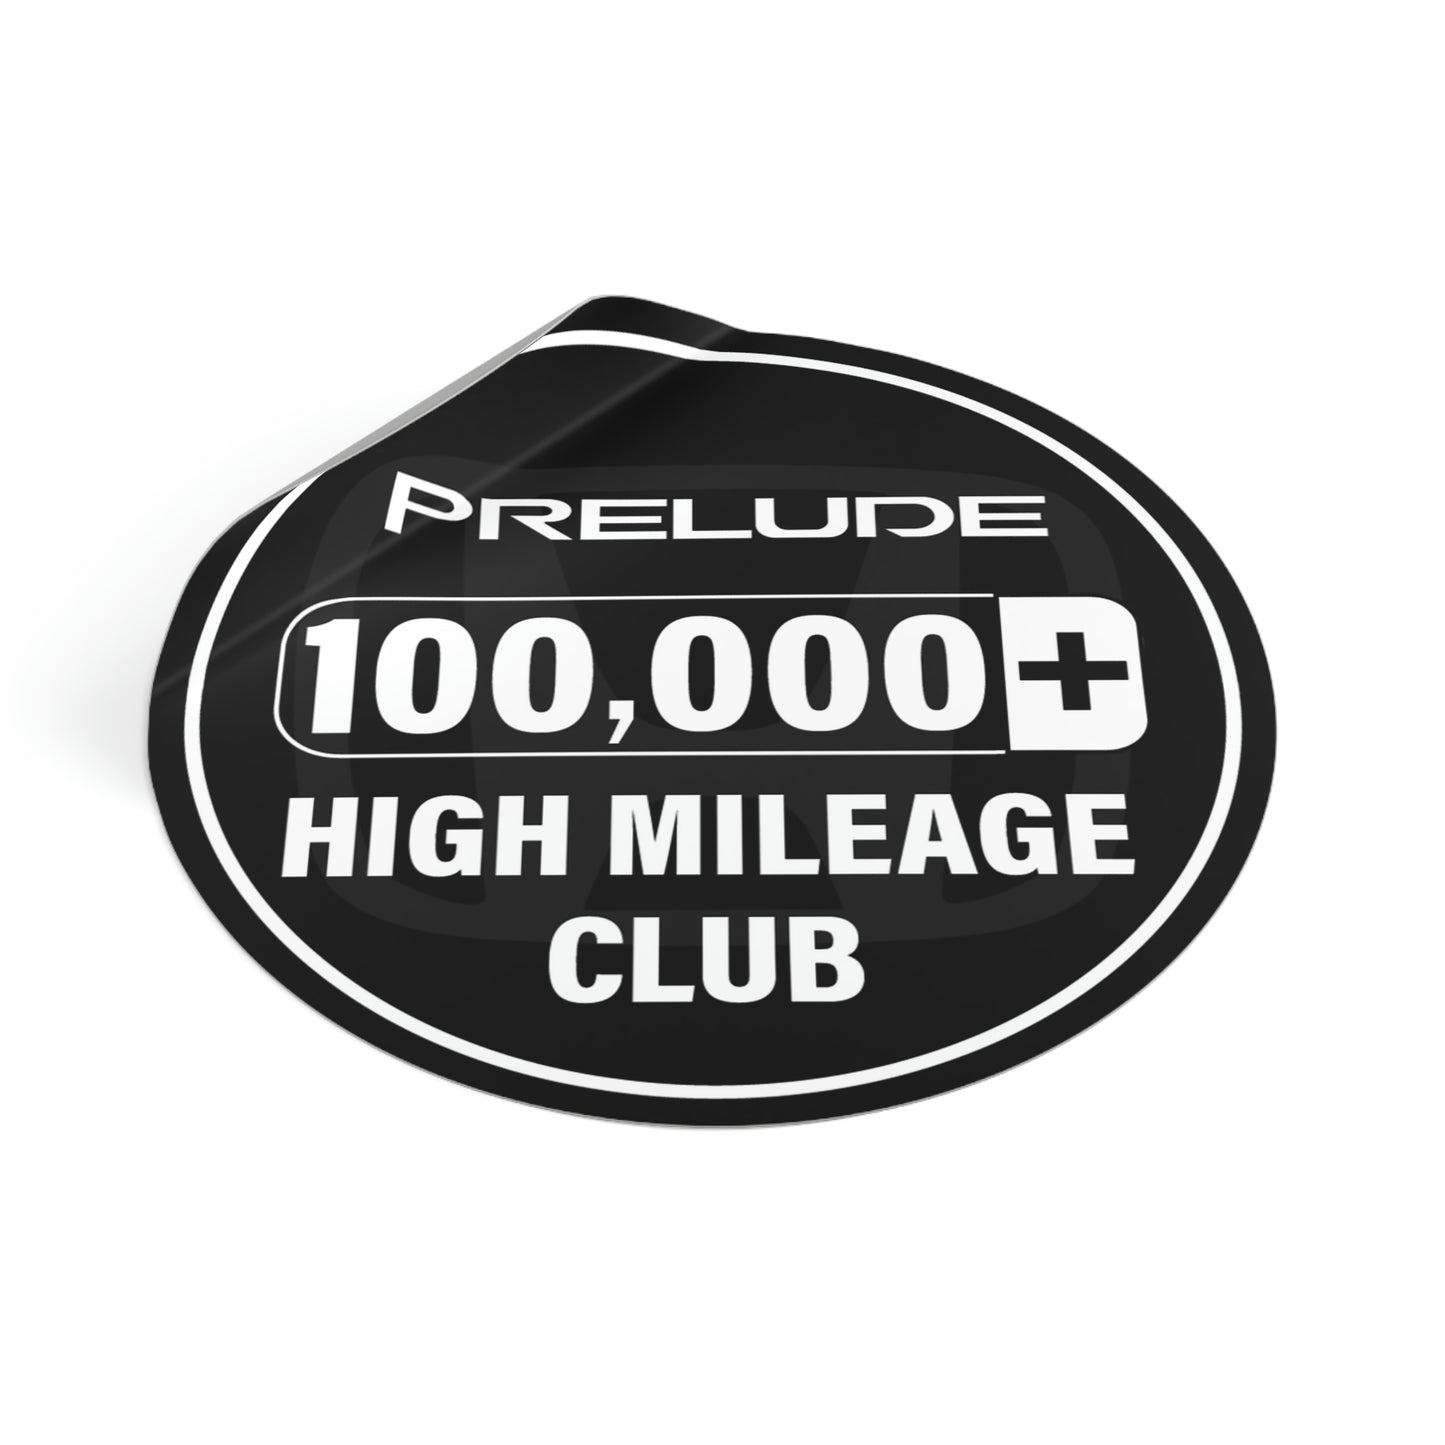 Honda Prelude High Mileage Club 100,000 Sticker/Decal